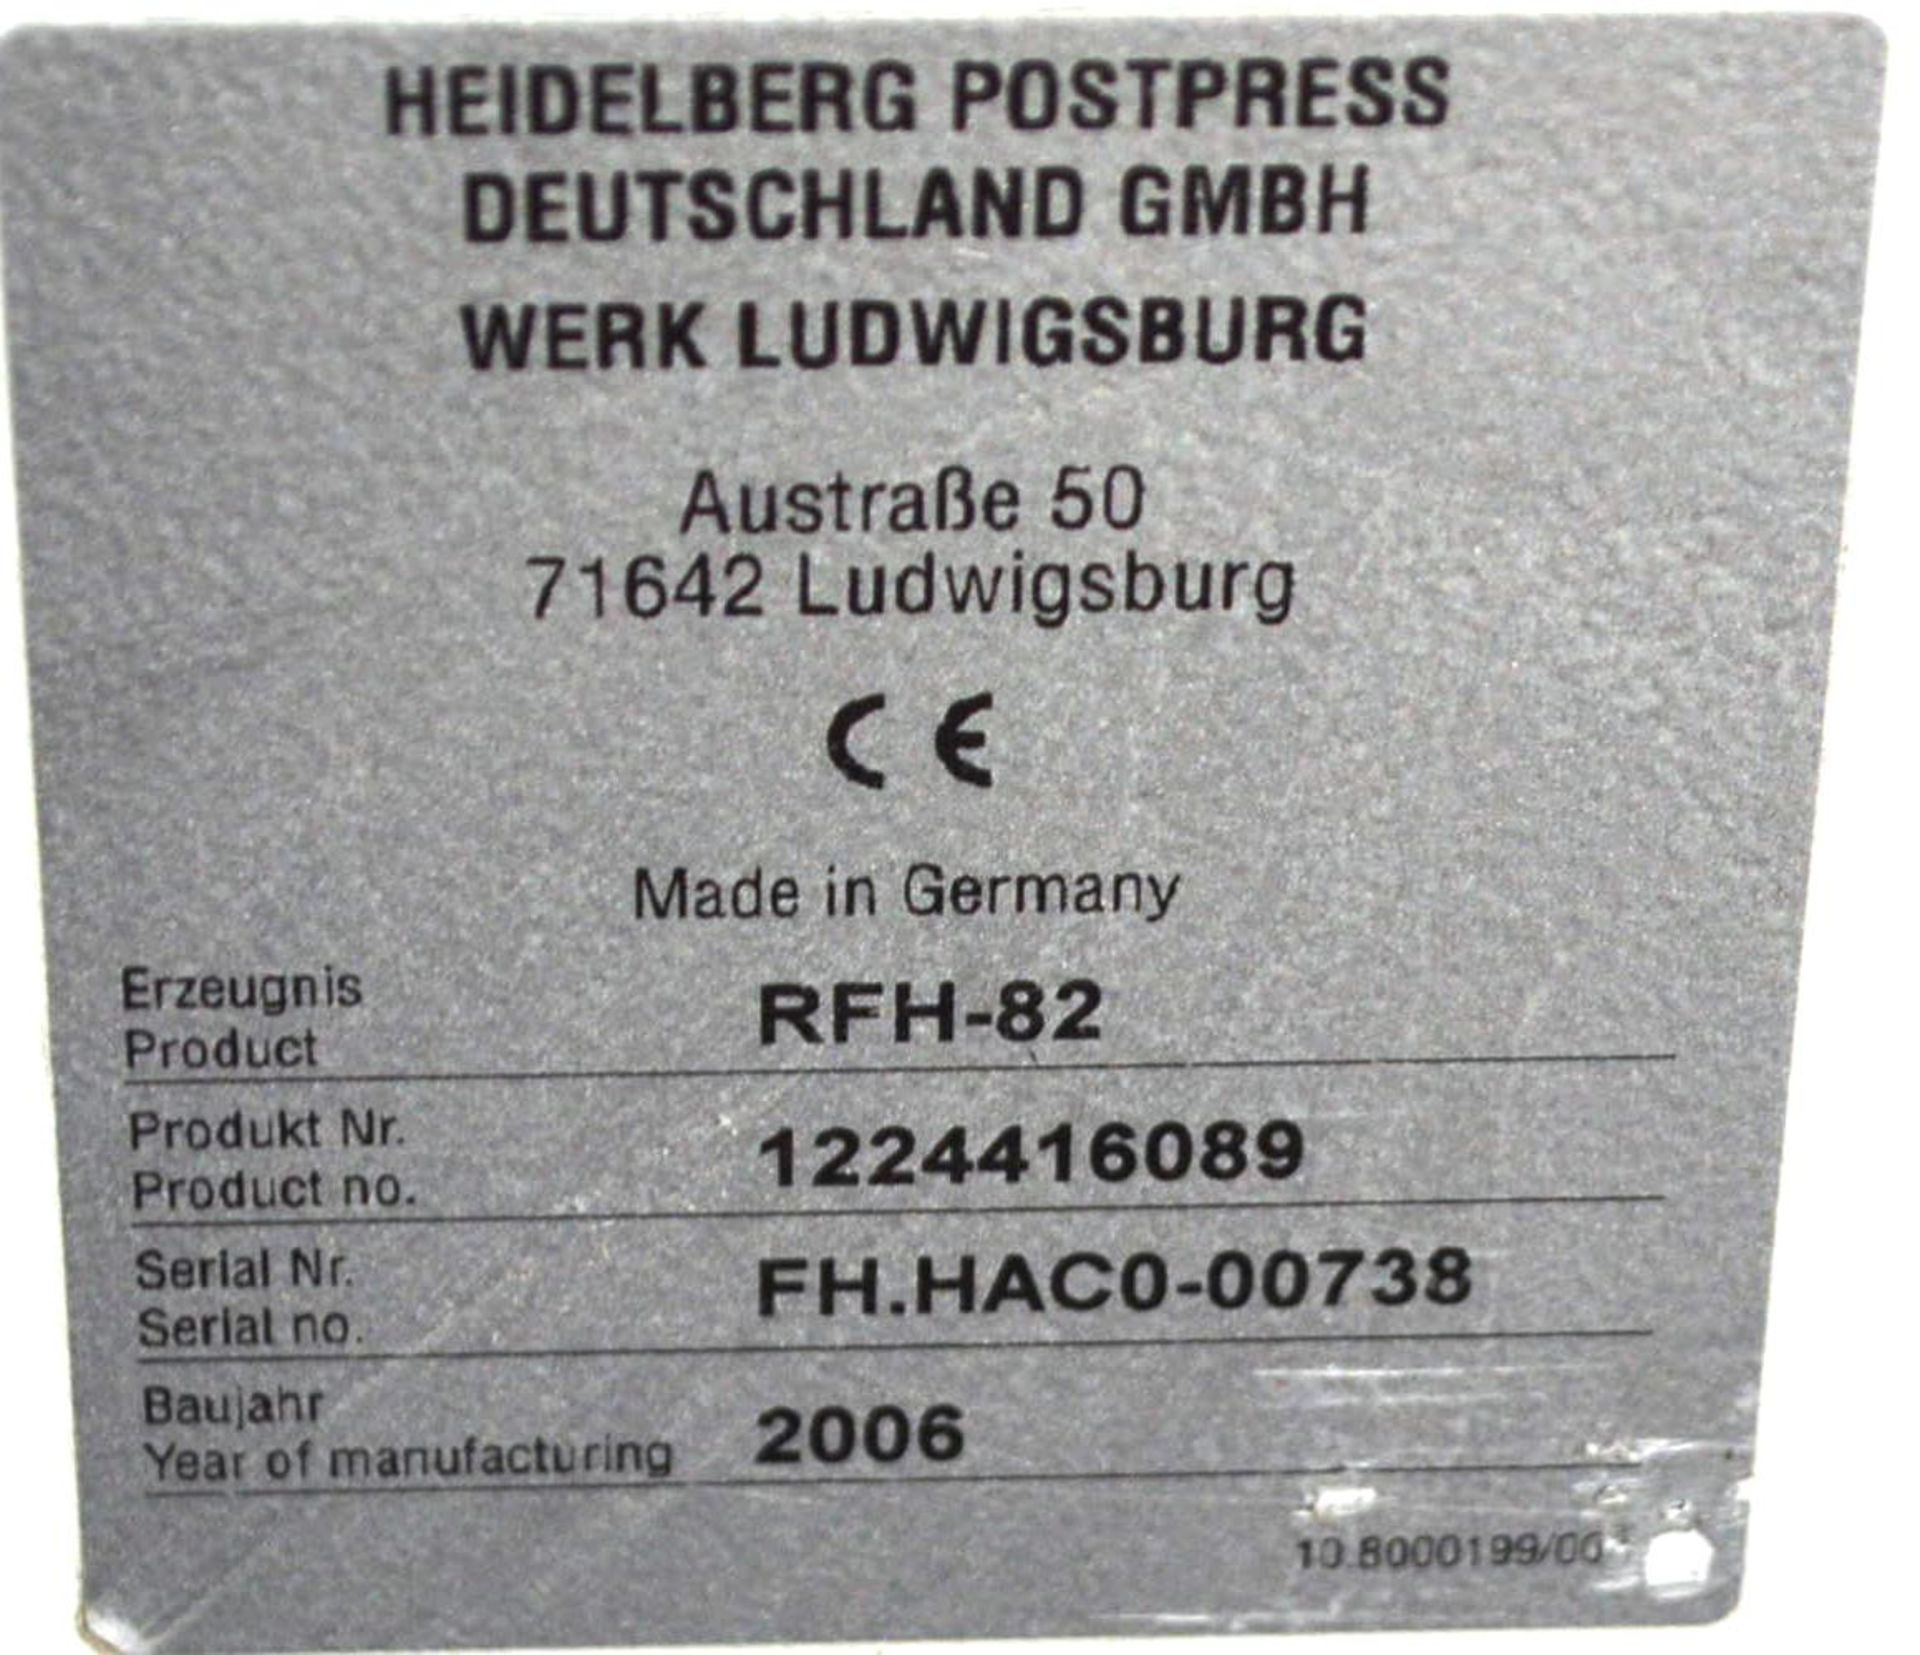 Heidelberg 32p.p STAHL TH82-6-4 FOLDER CREASING FOLDING LINE, with RFH-82 feeder, serial no. FH. - Image 11 of 19